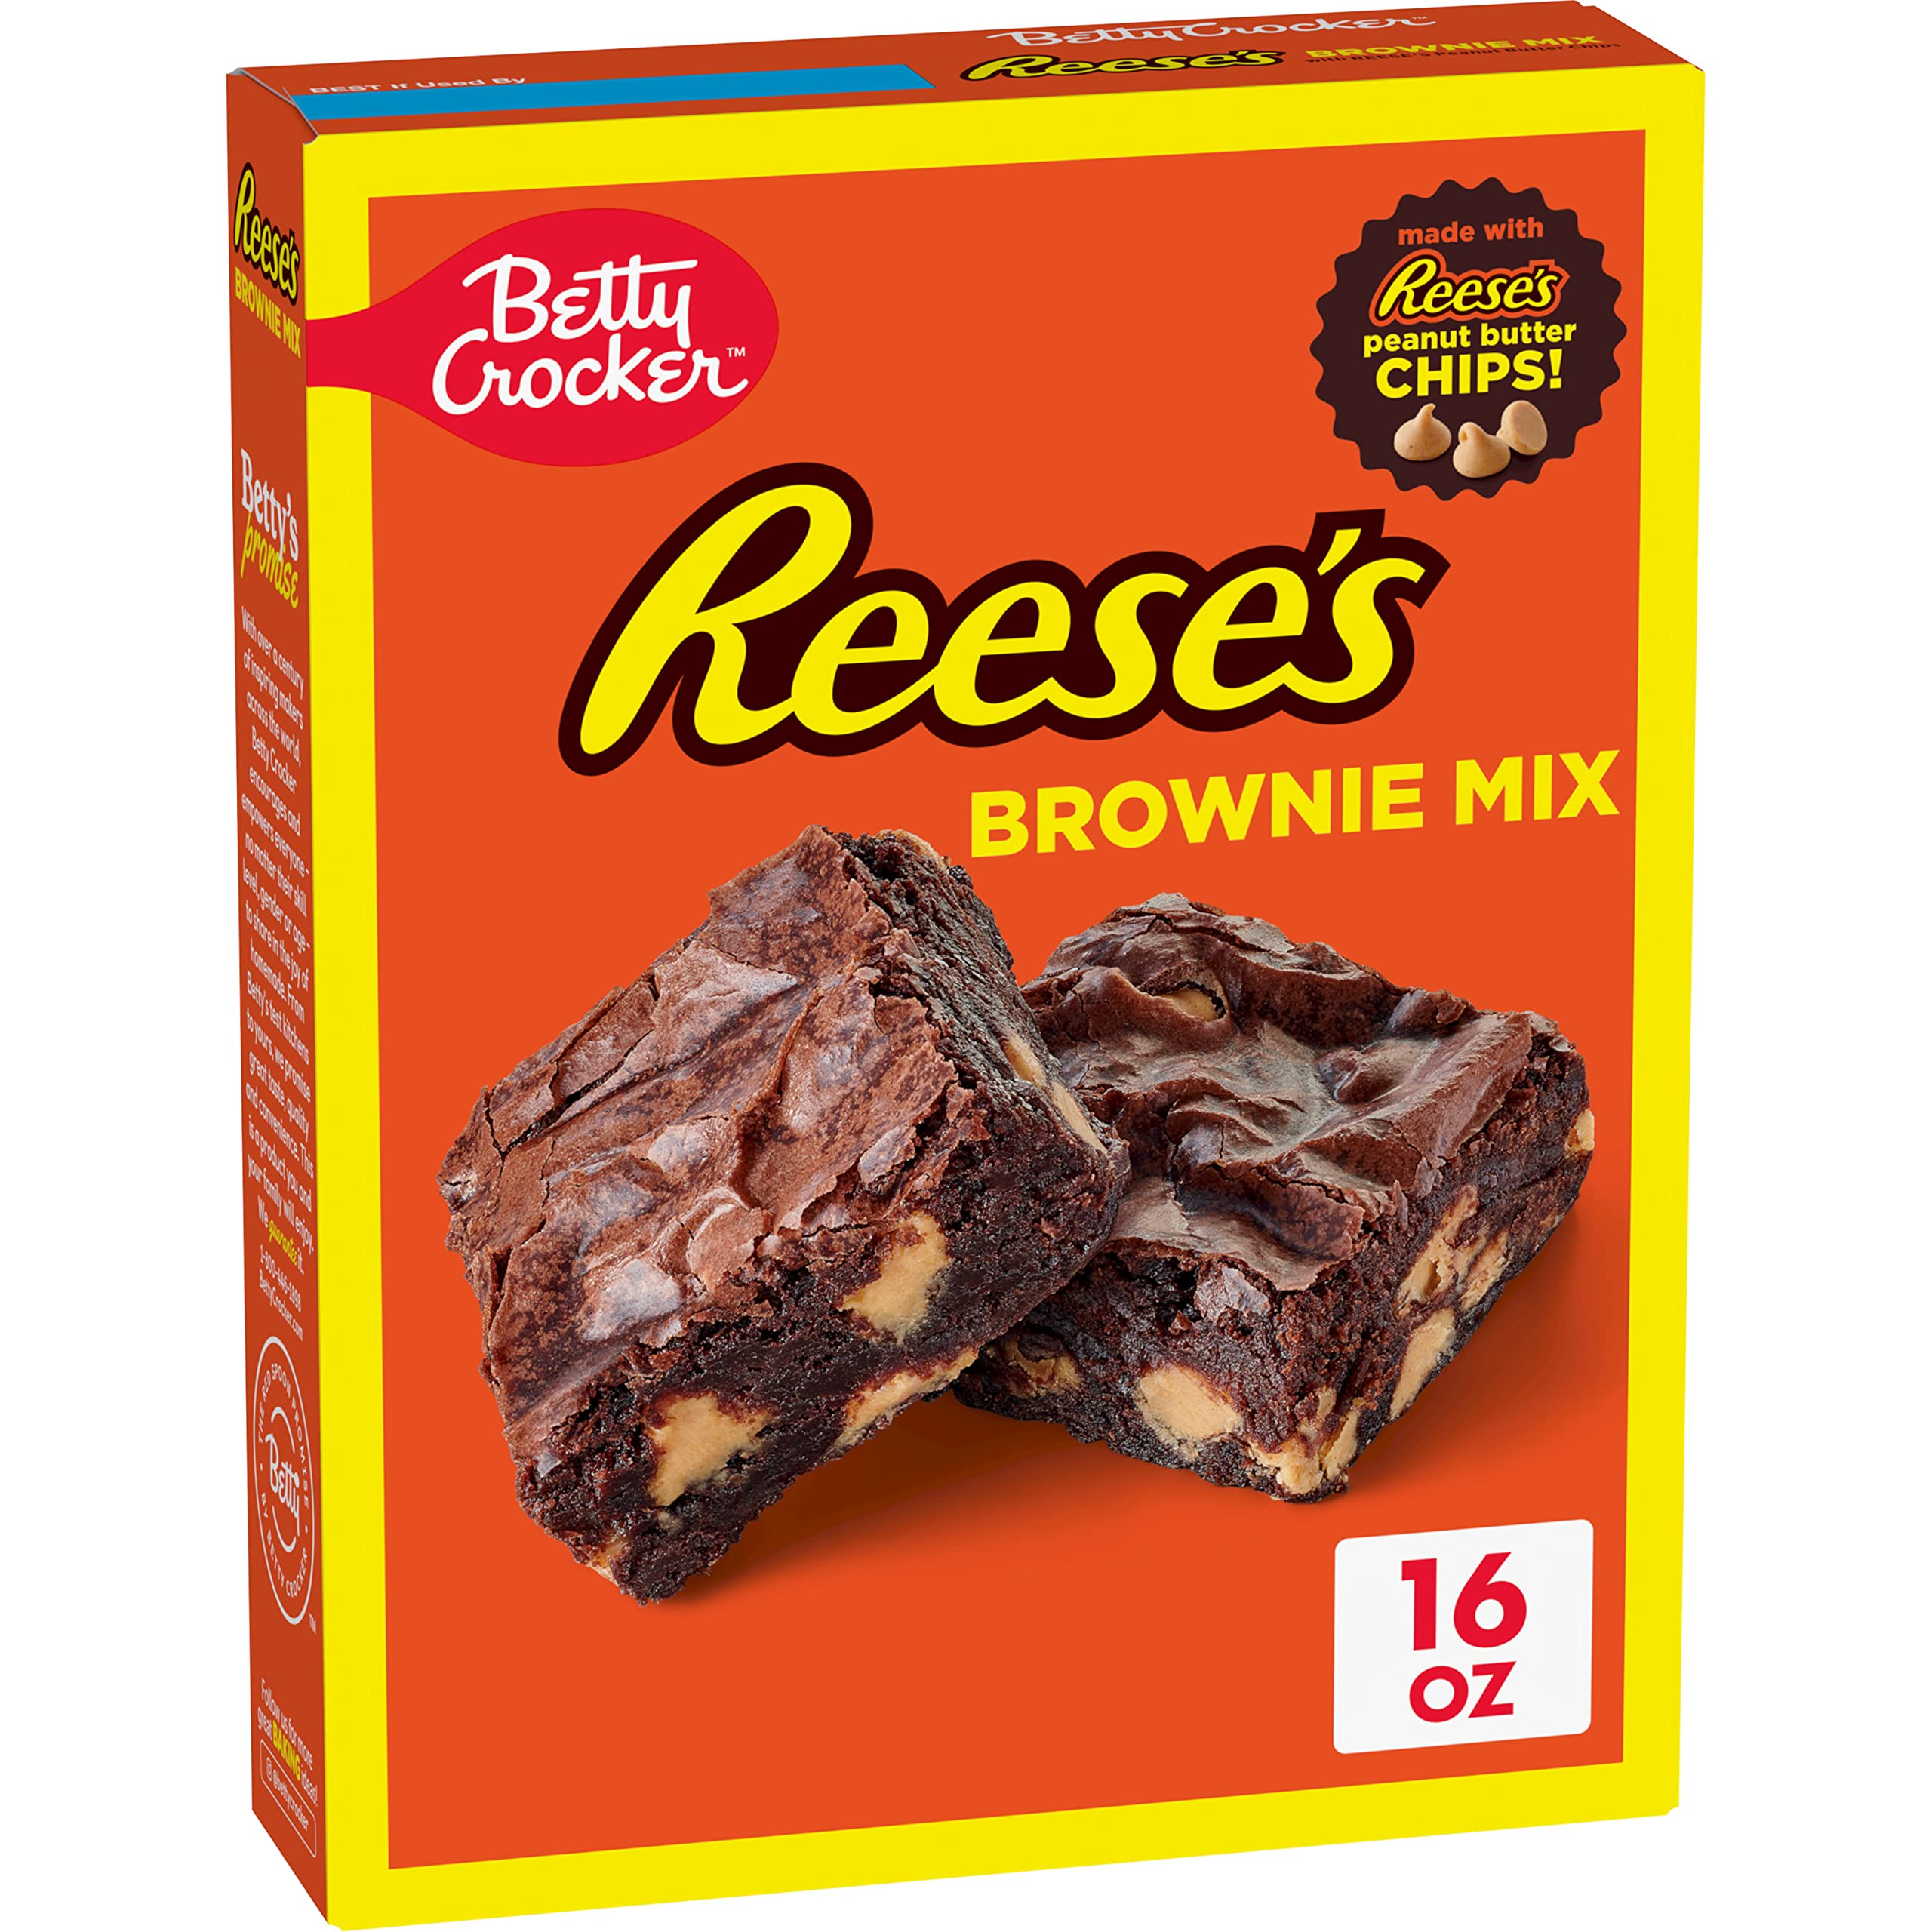 $2.25 /w S&S: 16-Oz Betty Crocker Reese's Peanut Butter Premium Brownie Mix